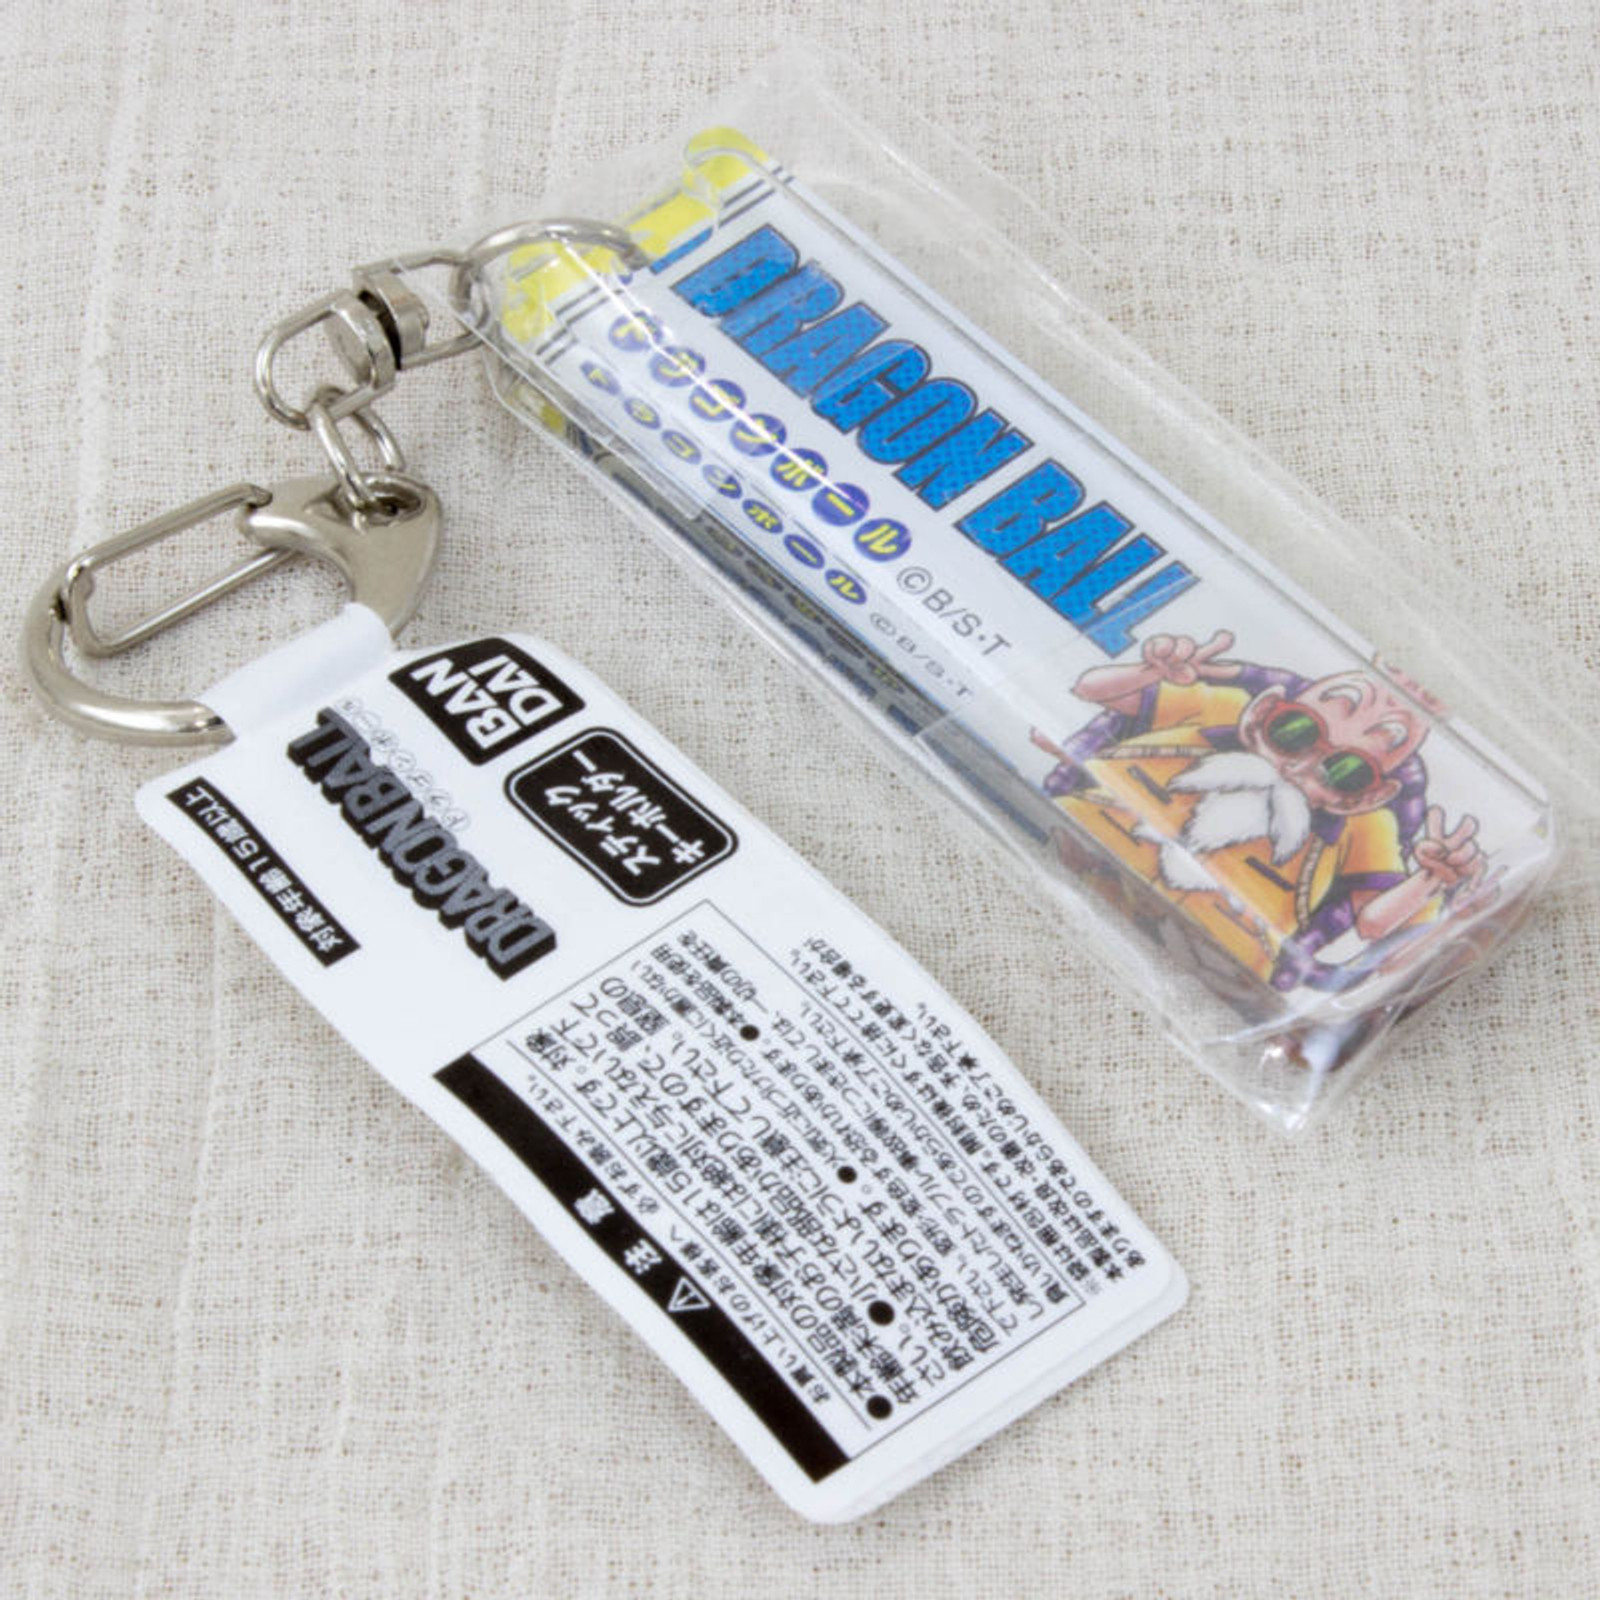 Dragon Ball Z Stick Type Charm Key Chain Kame-Sennin Ver. JAPAN MANGA ANIME